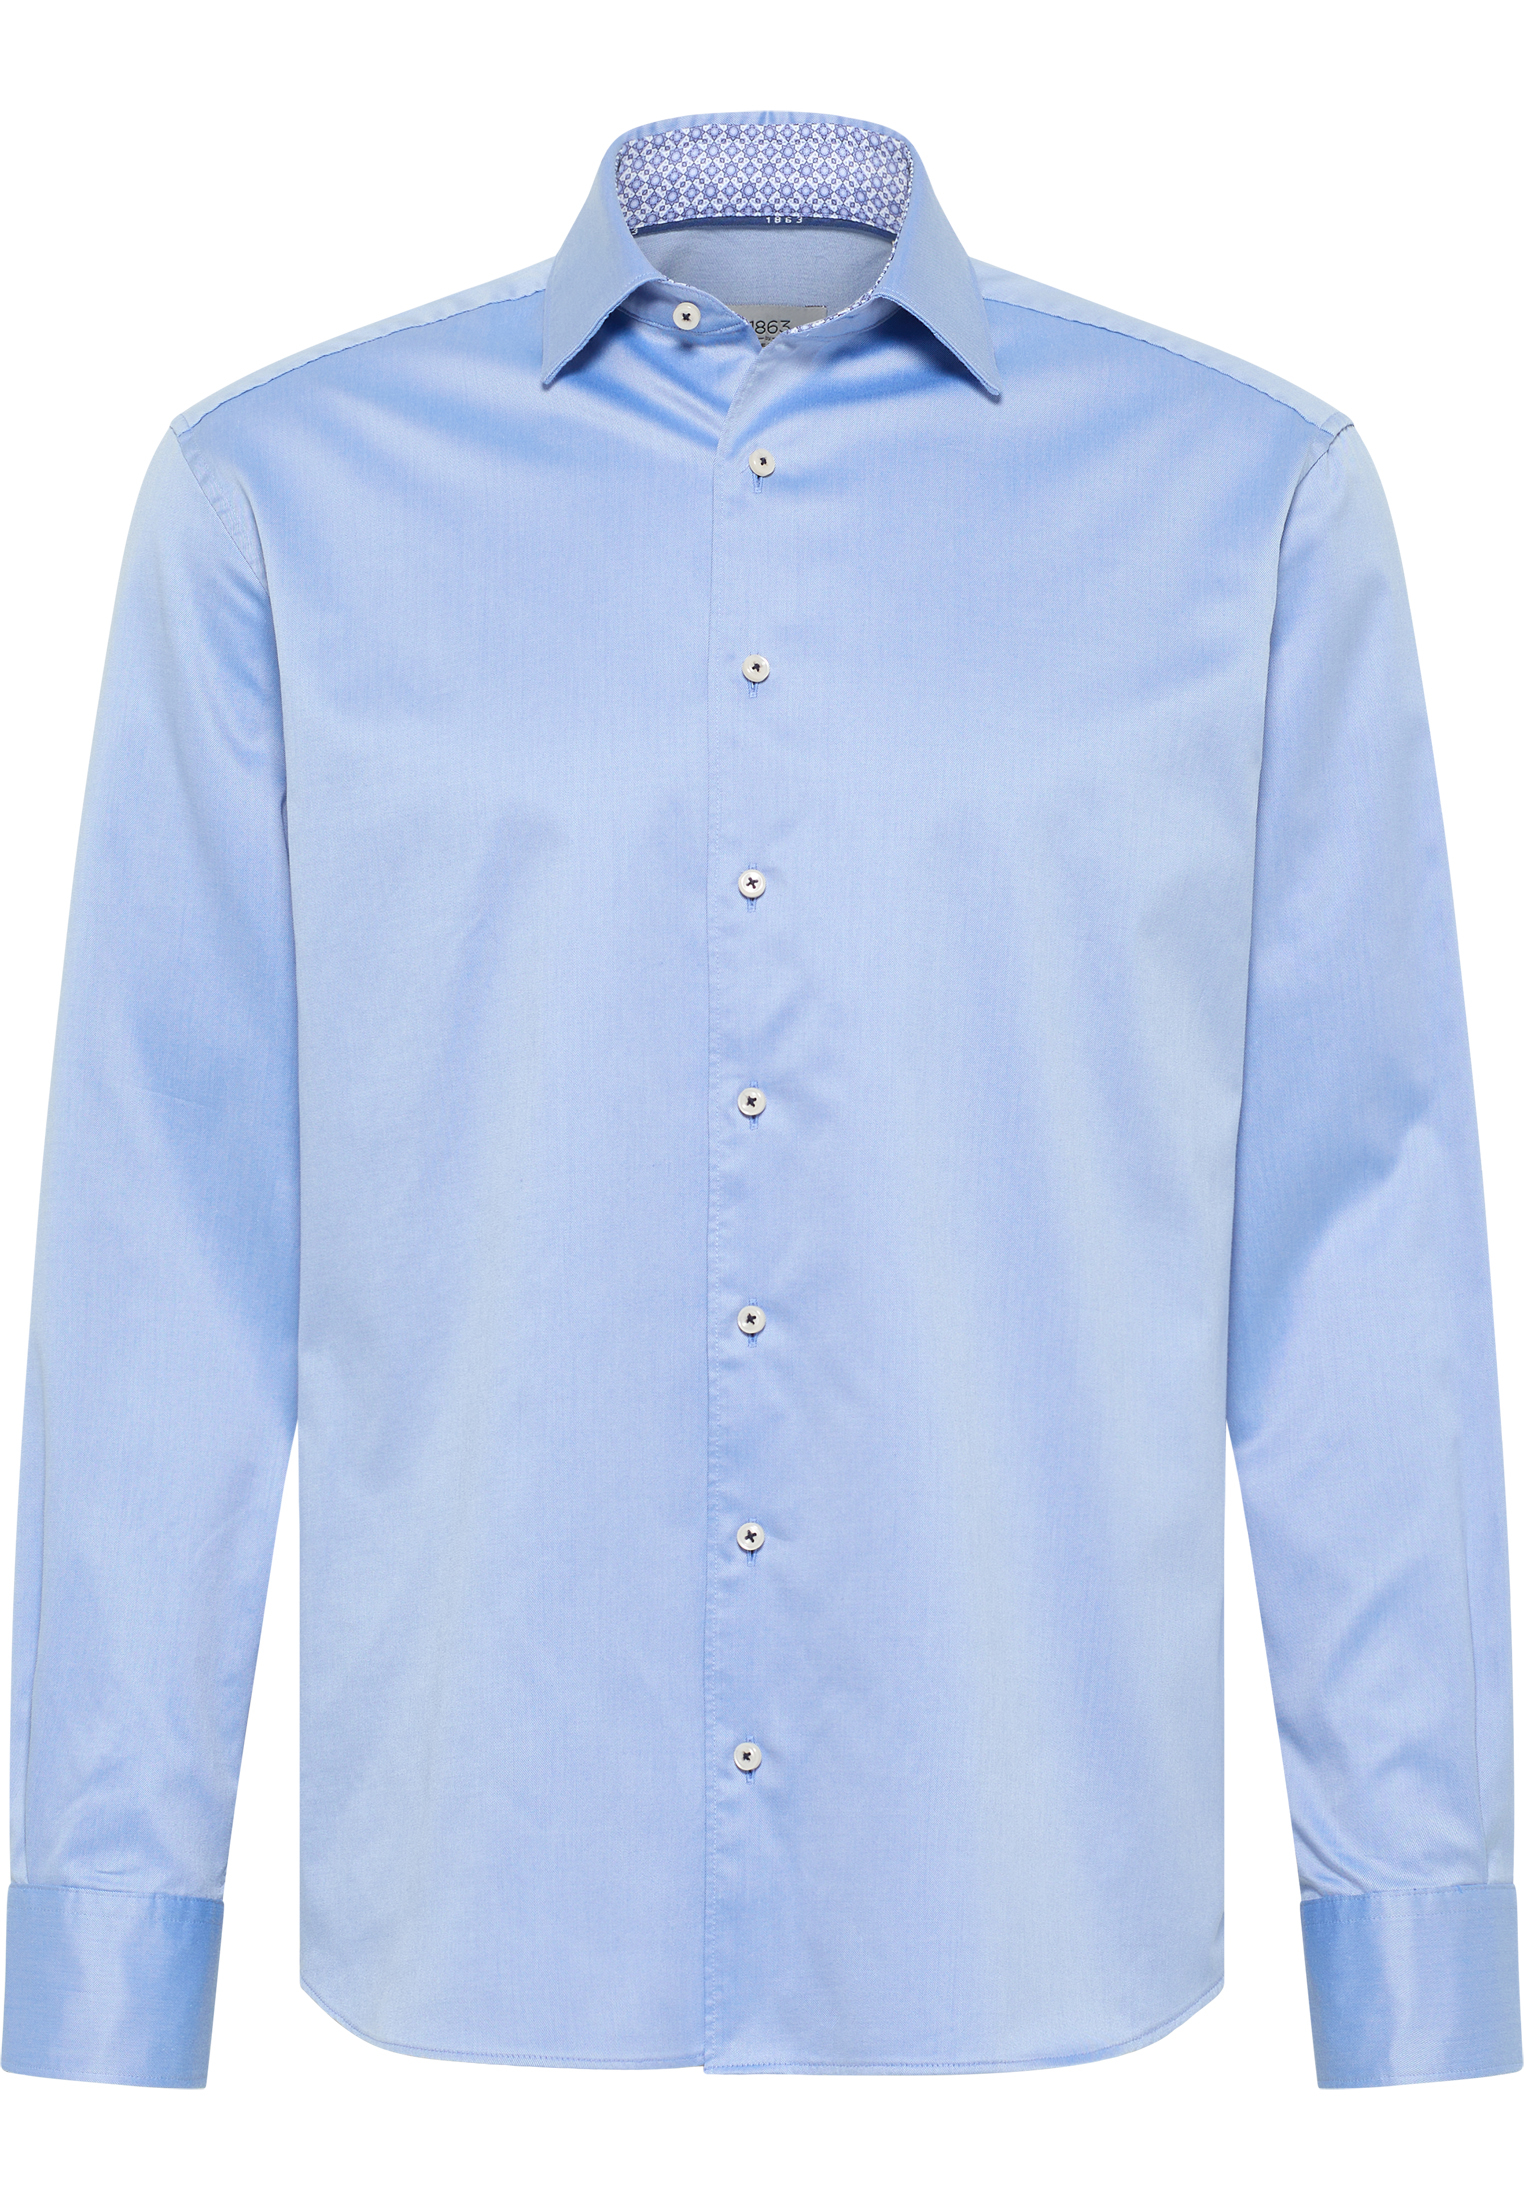 COMFORT FIT Soft Luxury Shirt in middenblauw vlakte